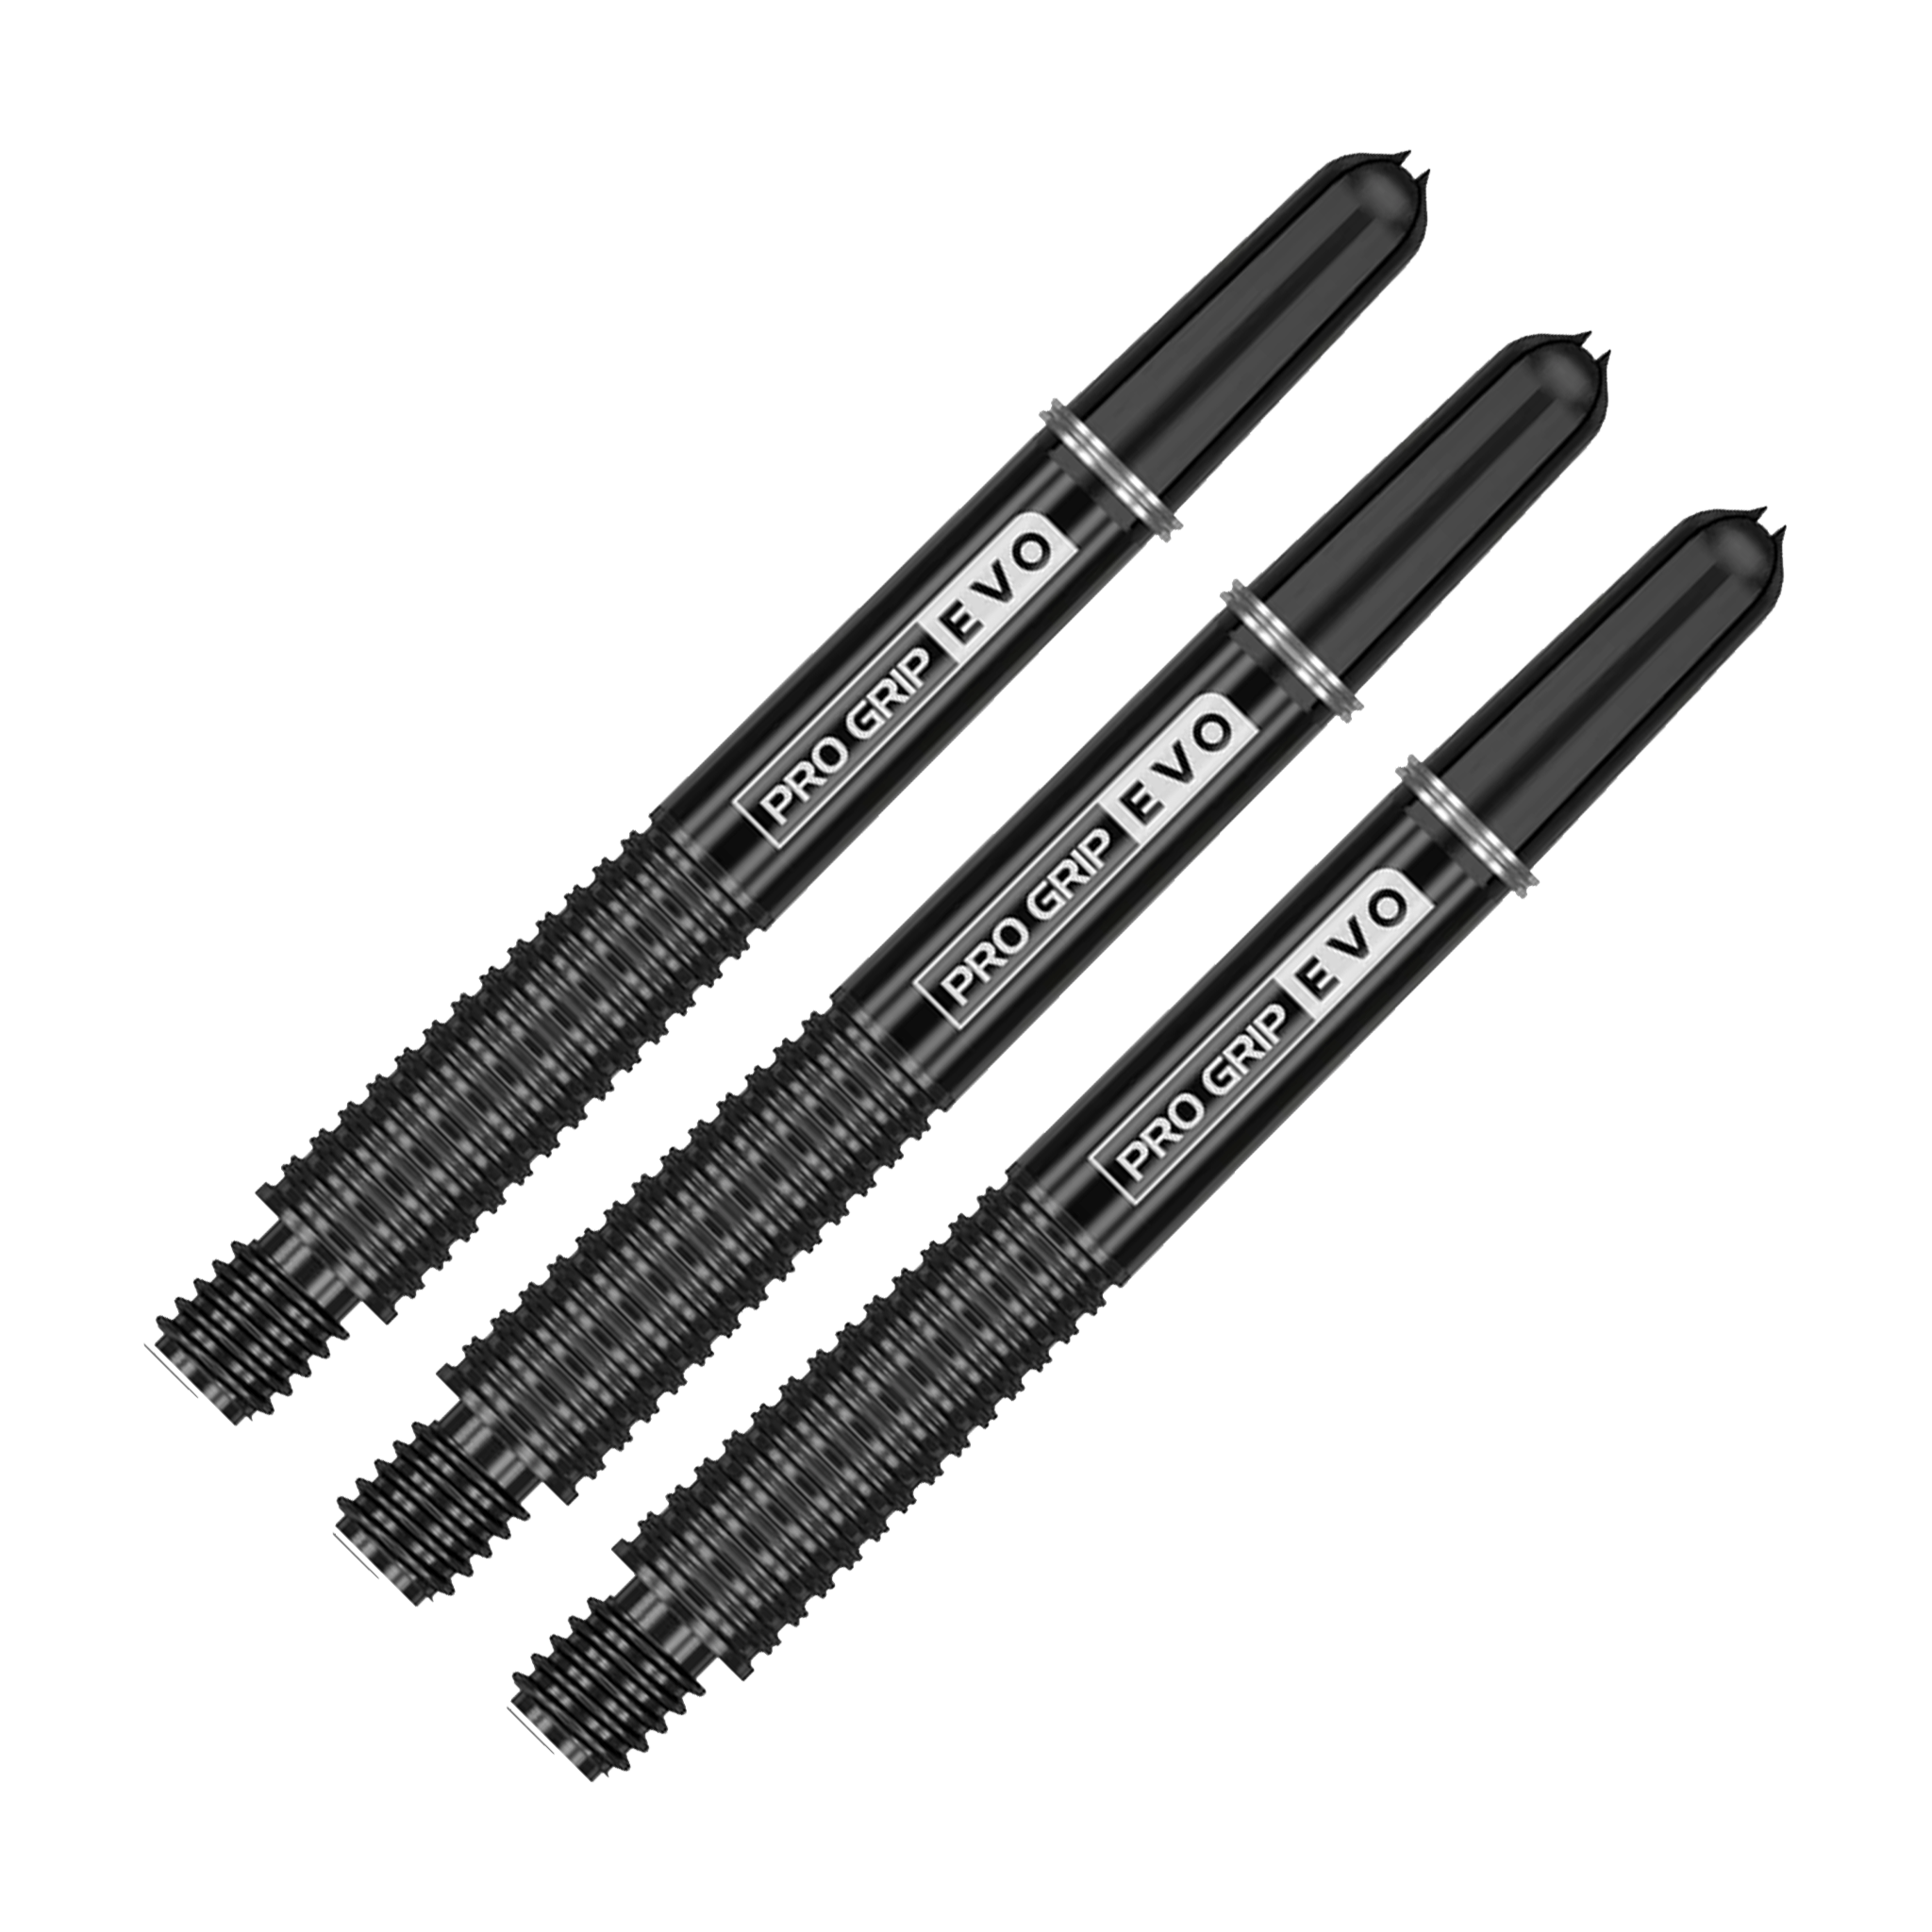 Target Pro Grip Evo - Aluminium / Nylon Dart Shafts Black / Medium (47.7mm) Shafts